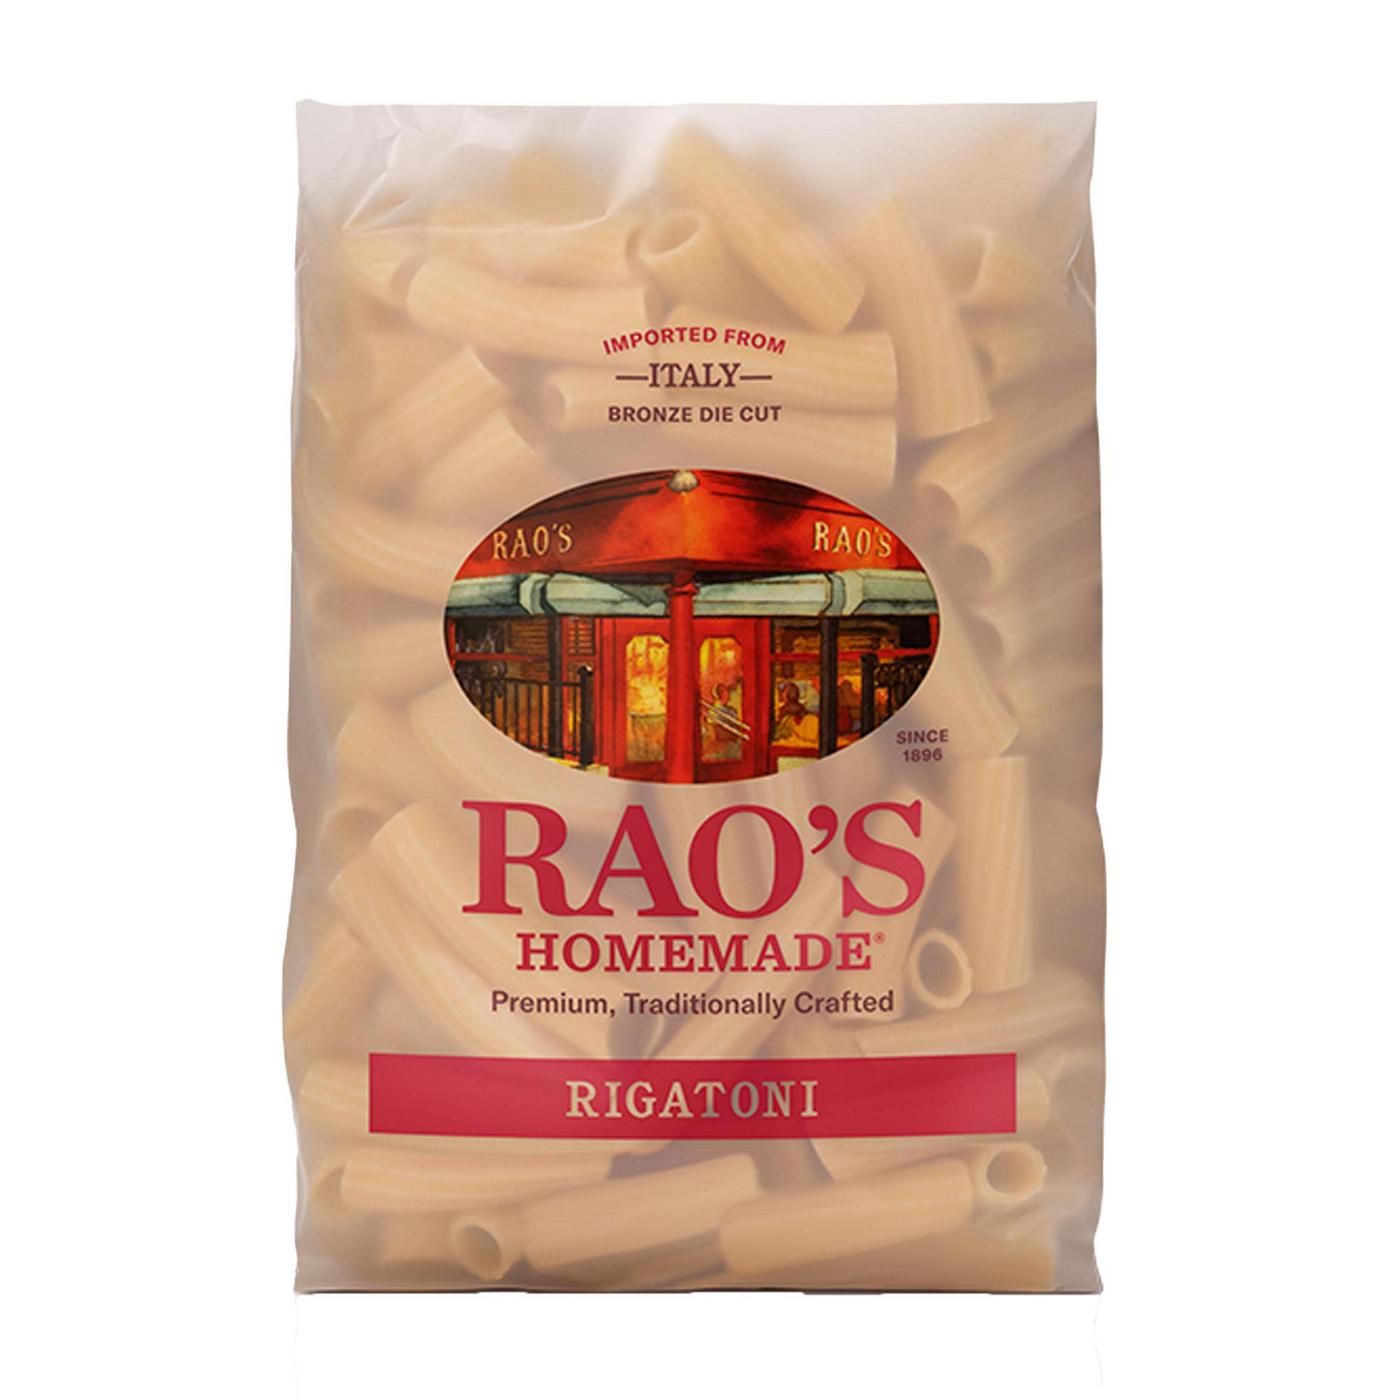 Rao's Homemade Rigatoni Pasta; image 1 of 3